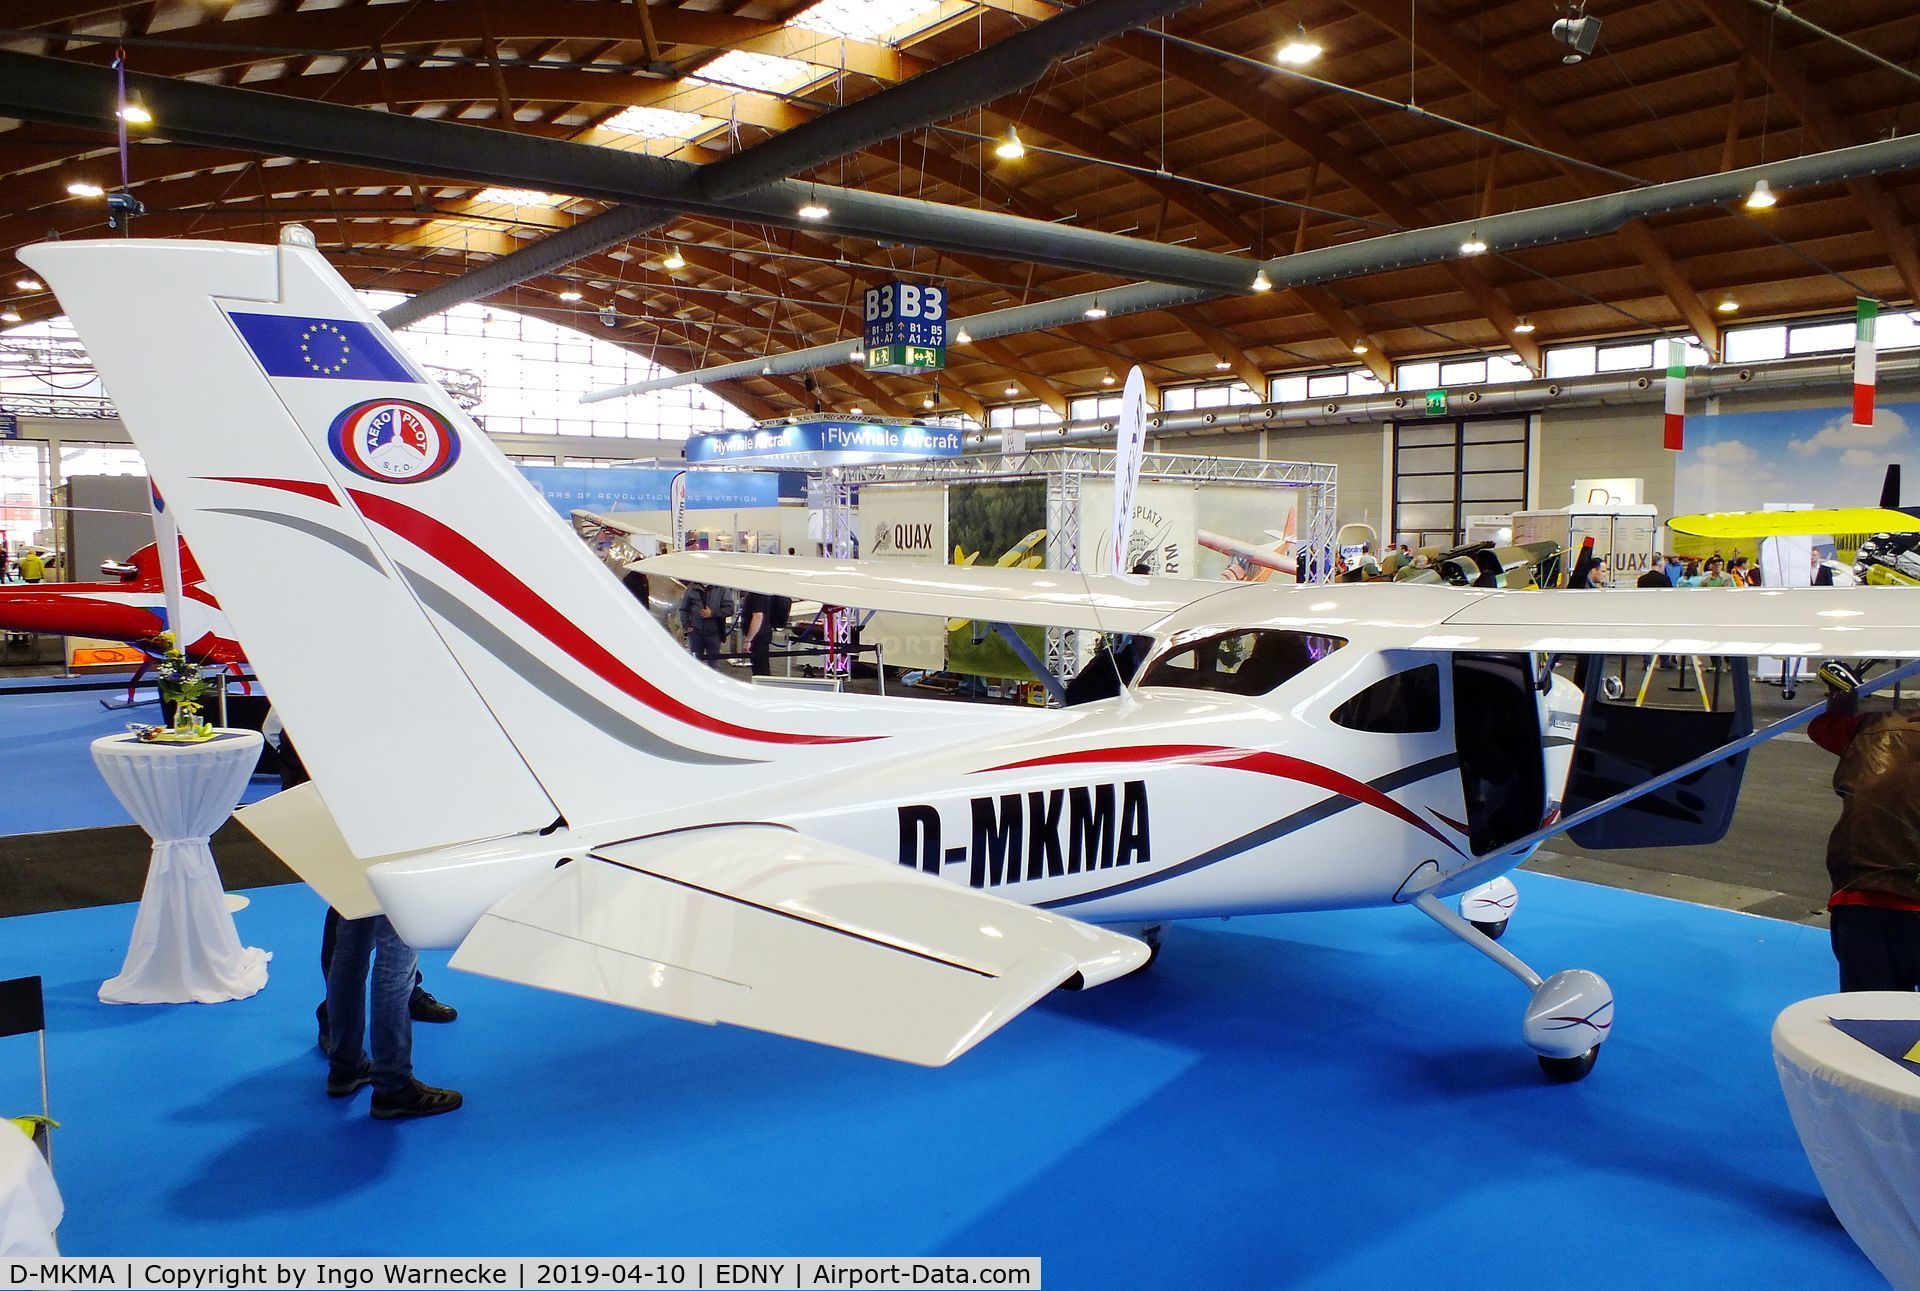 D-MKMA, Aeropilot Legend 540 C/N Not found D-MKMA, Aeropilot Legend 540 at the AERO 2019, Friedrichshafen